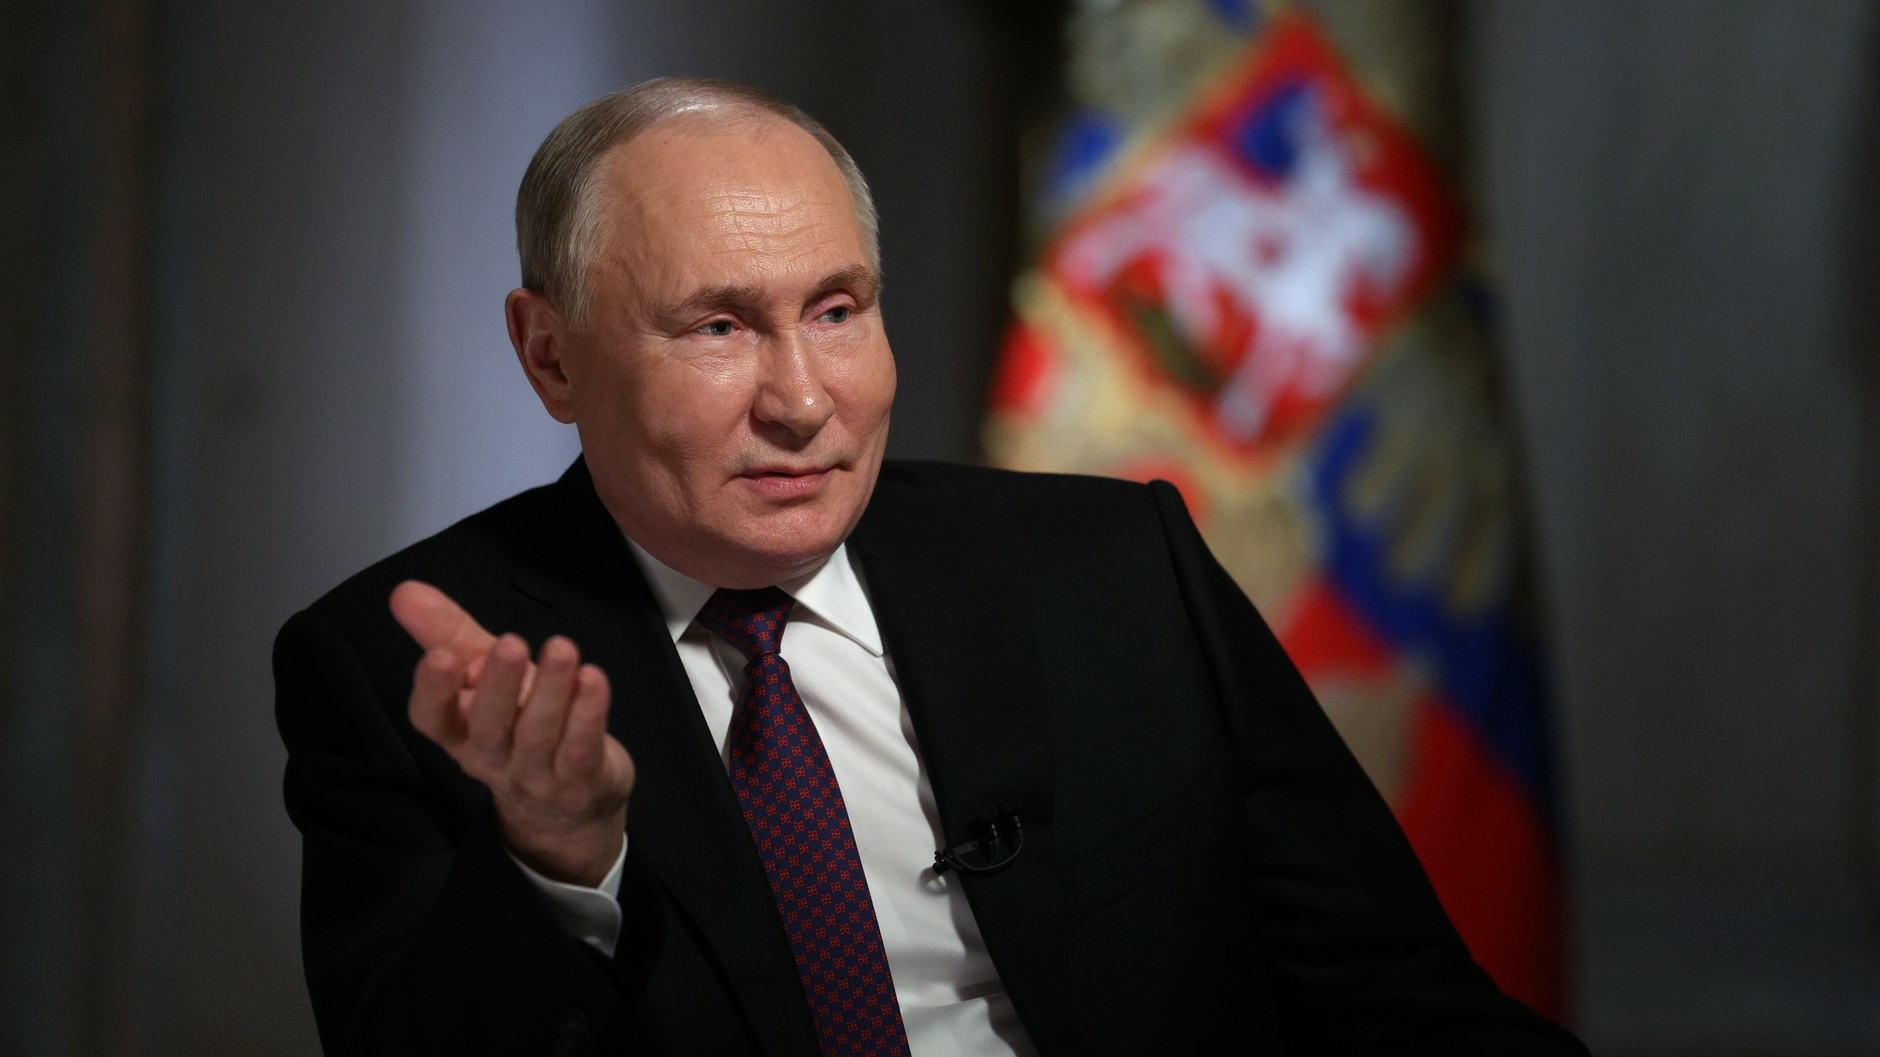 Путин рассказал о росте бюджета РФ